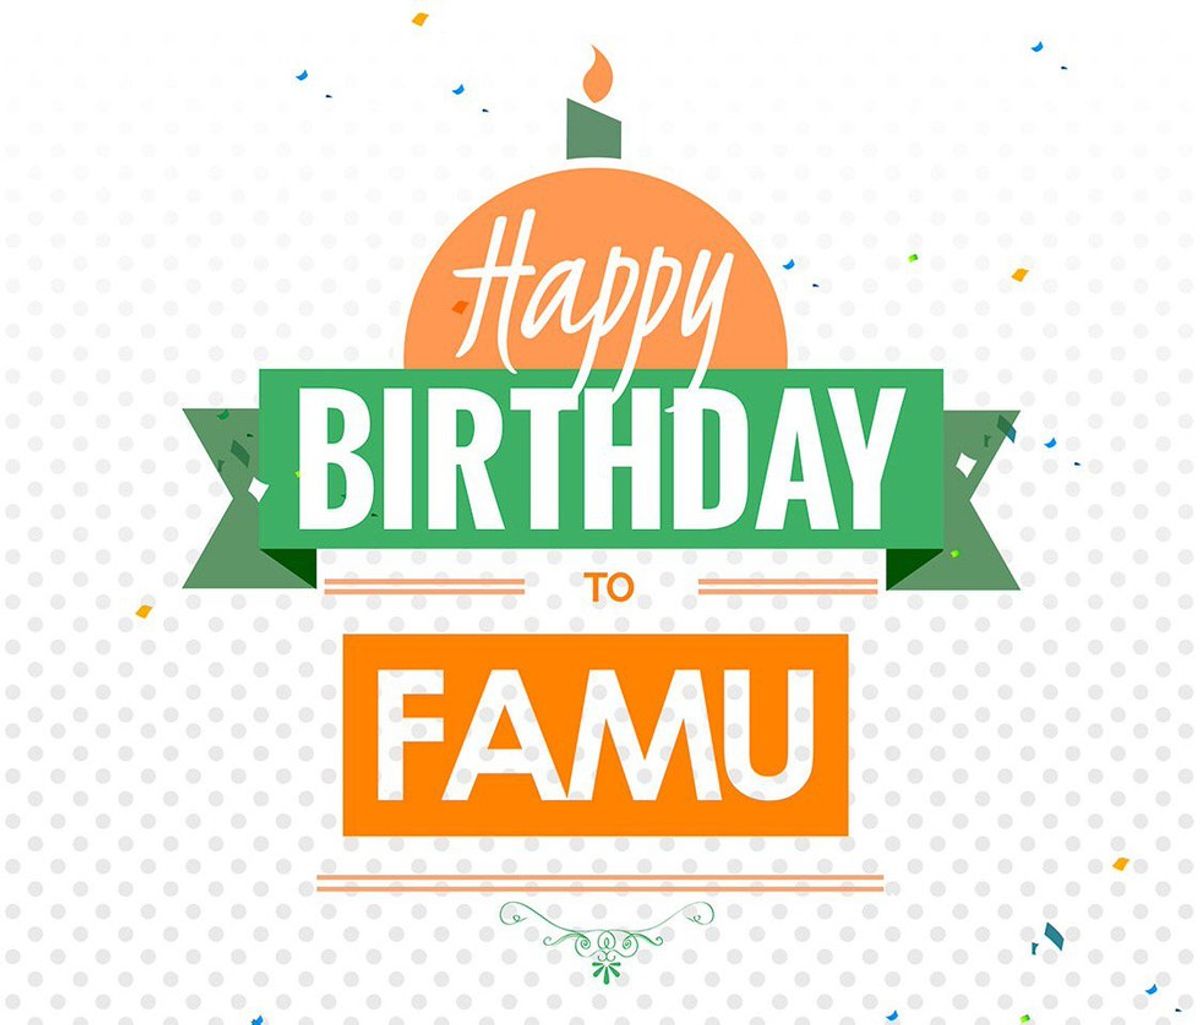 FAMU Rings In 129 Years Of Community